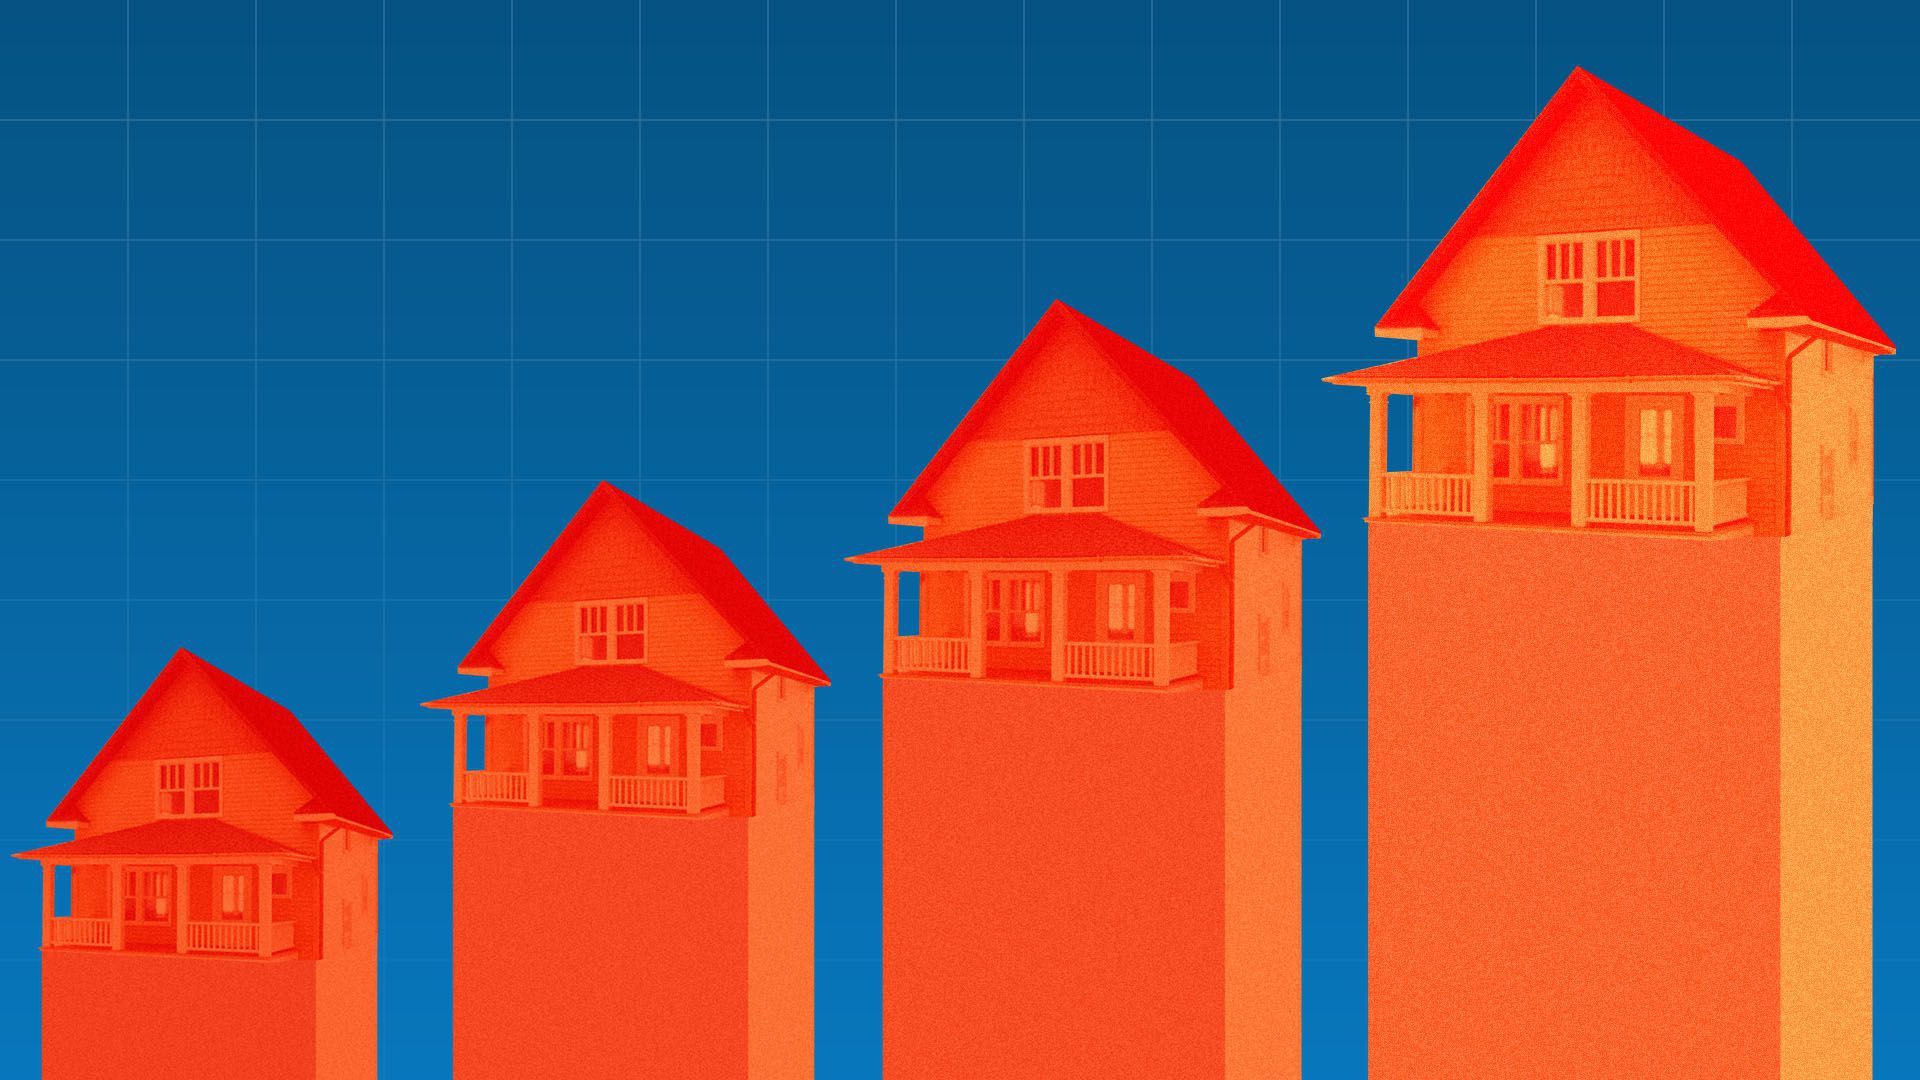 An illustration of houses rising higher.